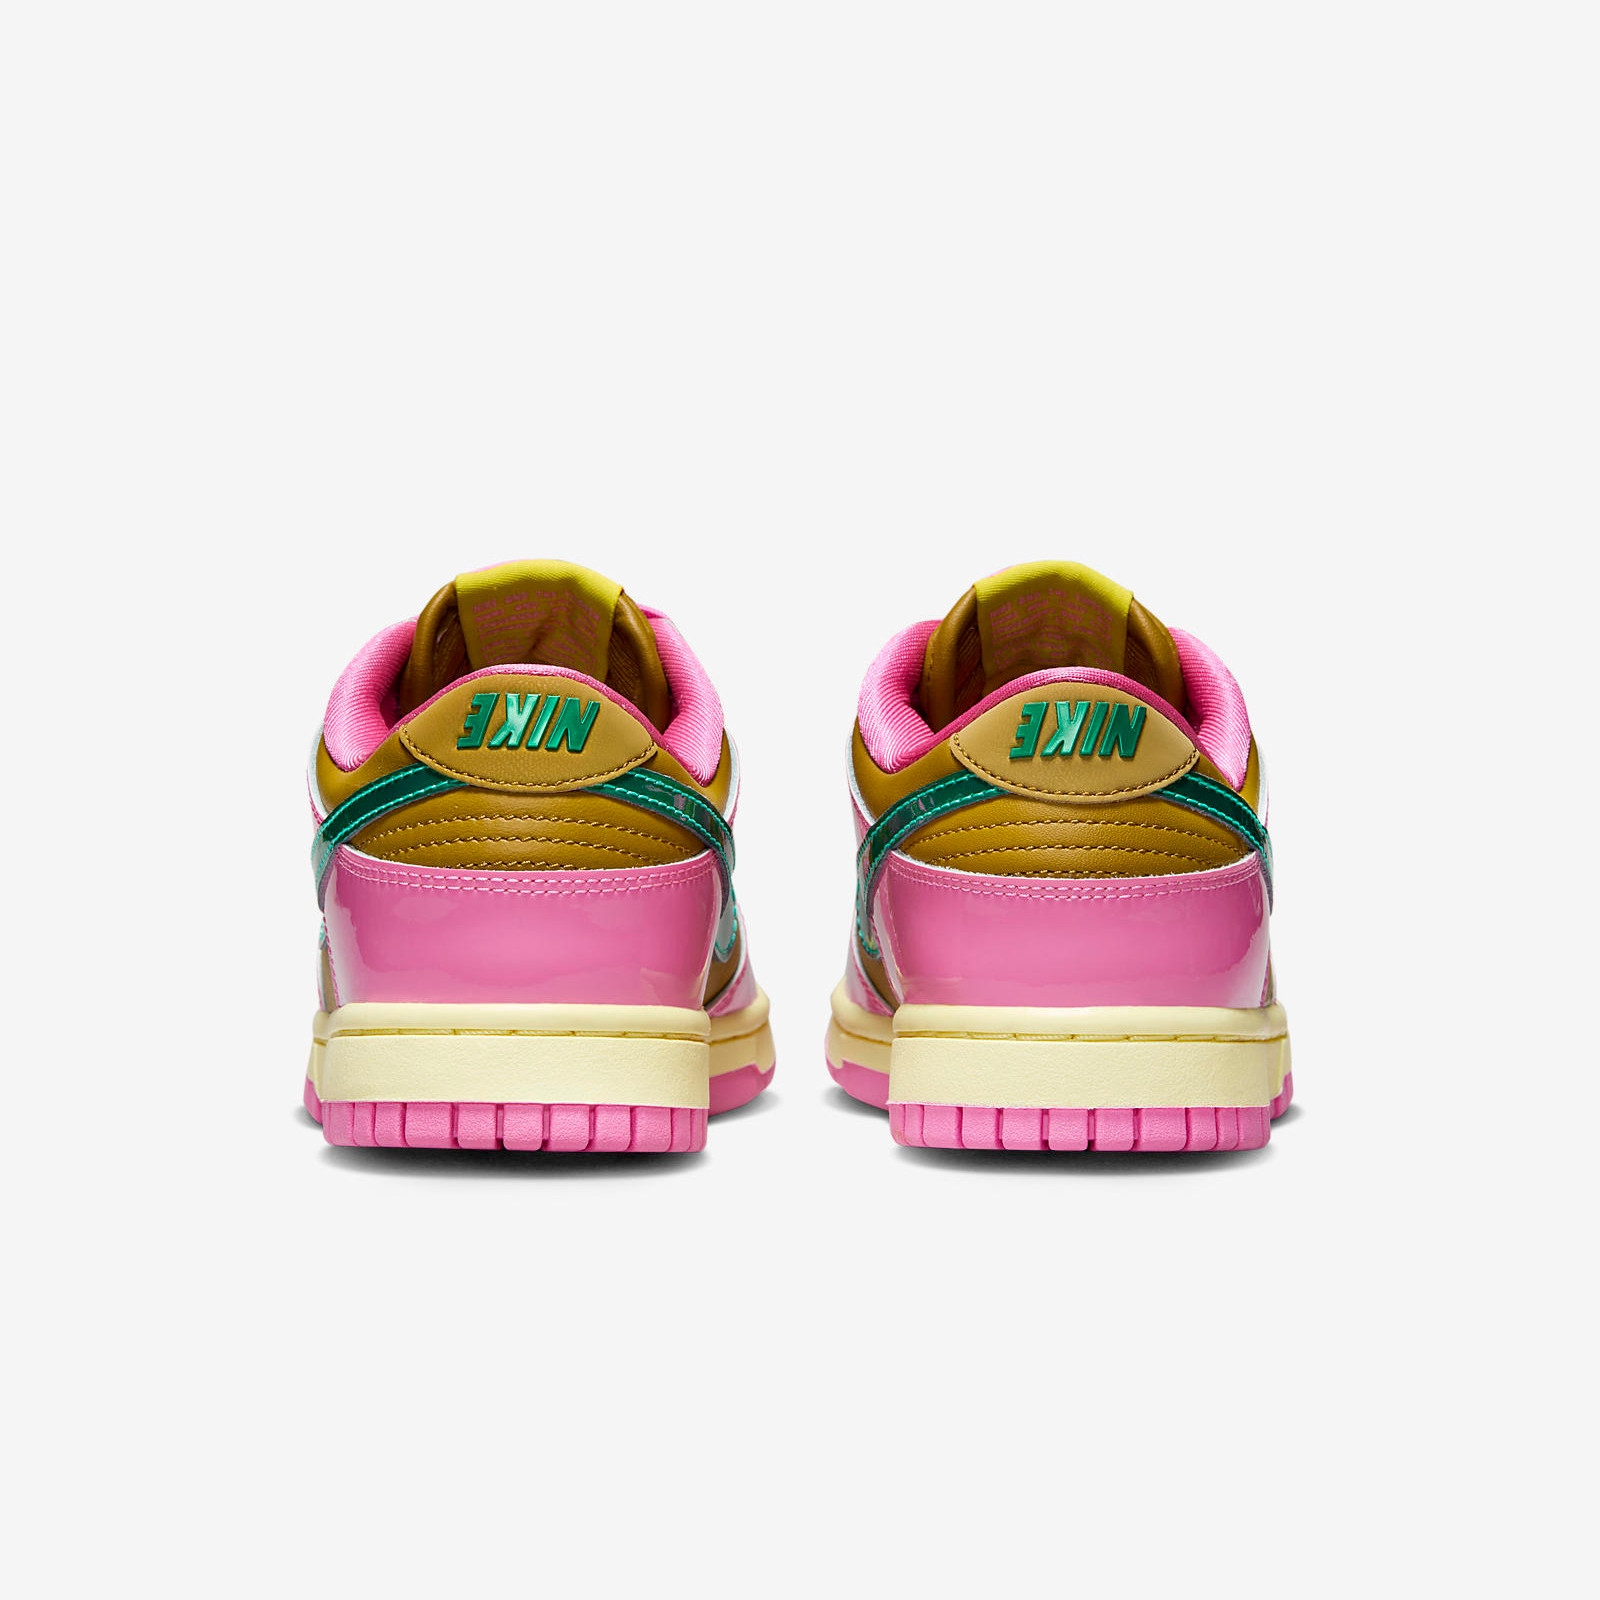 Parris Goebel x Nike
Dunk Low
« Playful Pink »